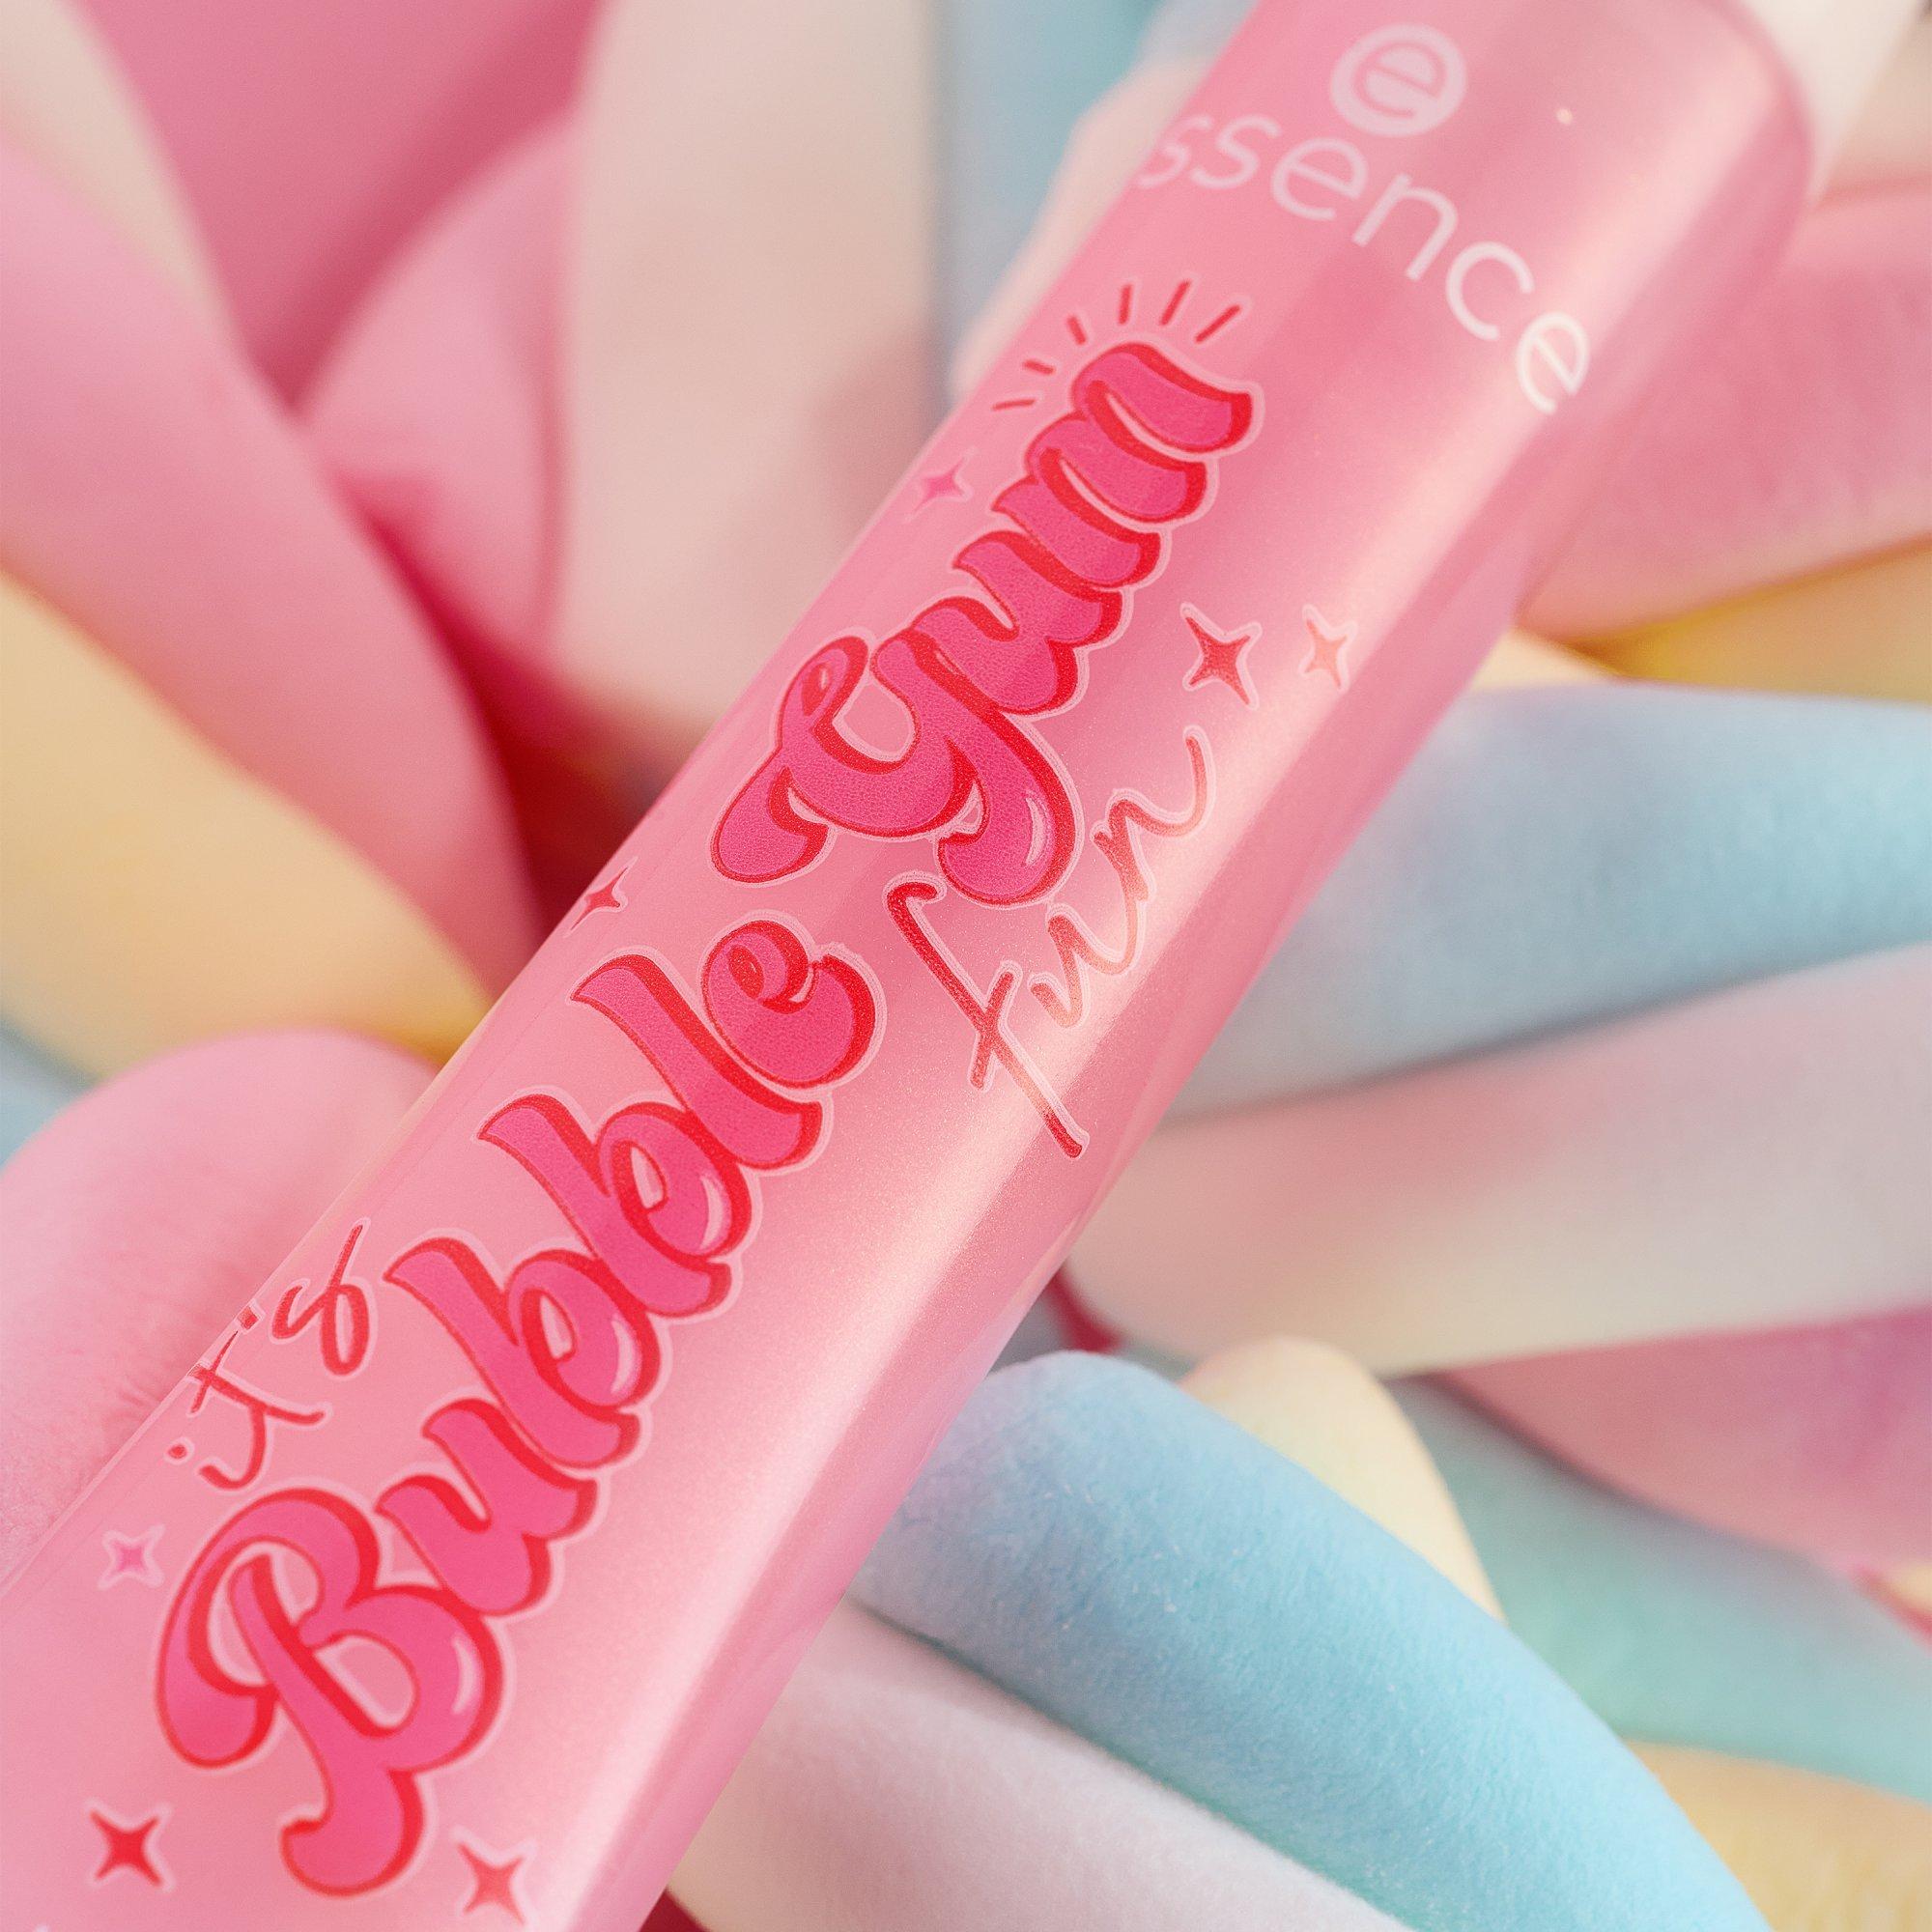 it's Bubble Gum fun shiny lipgloss